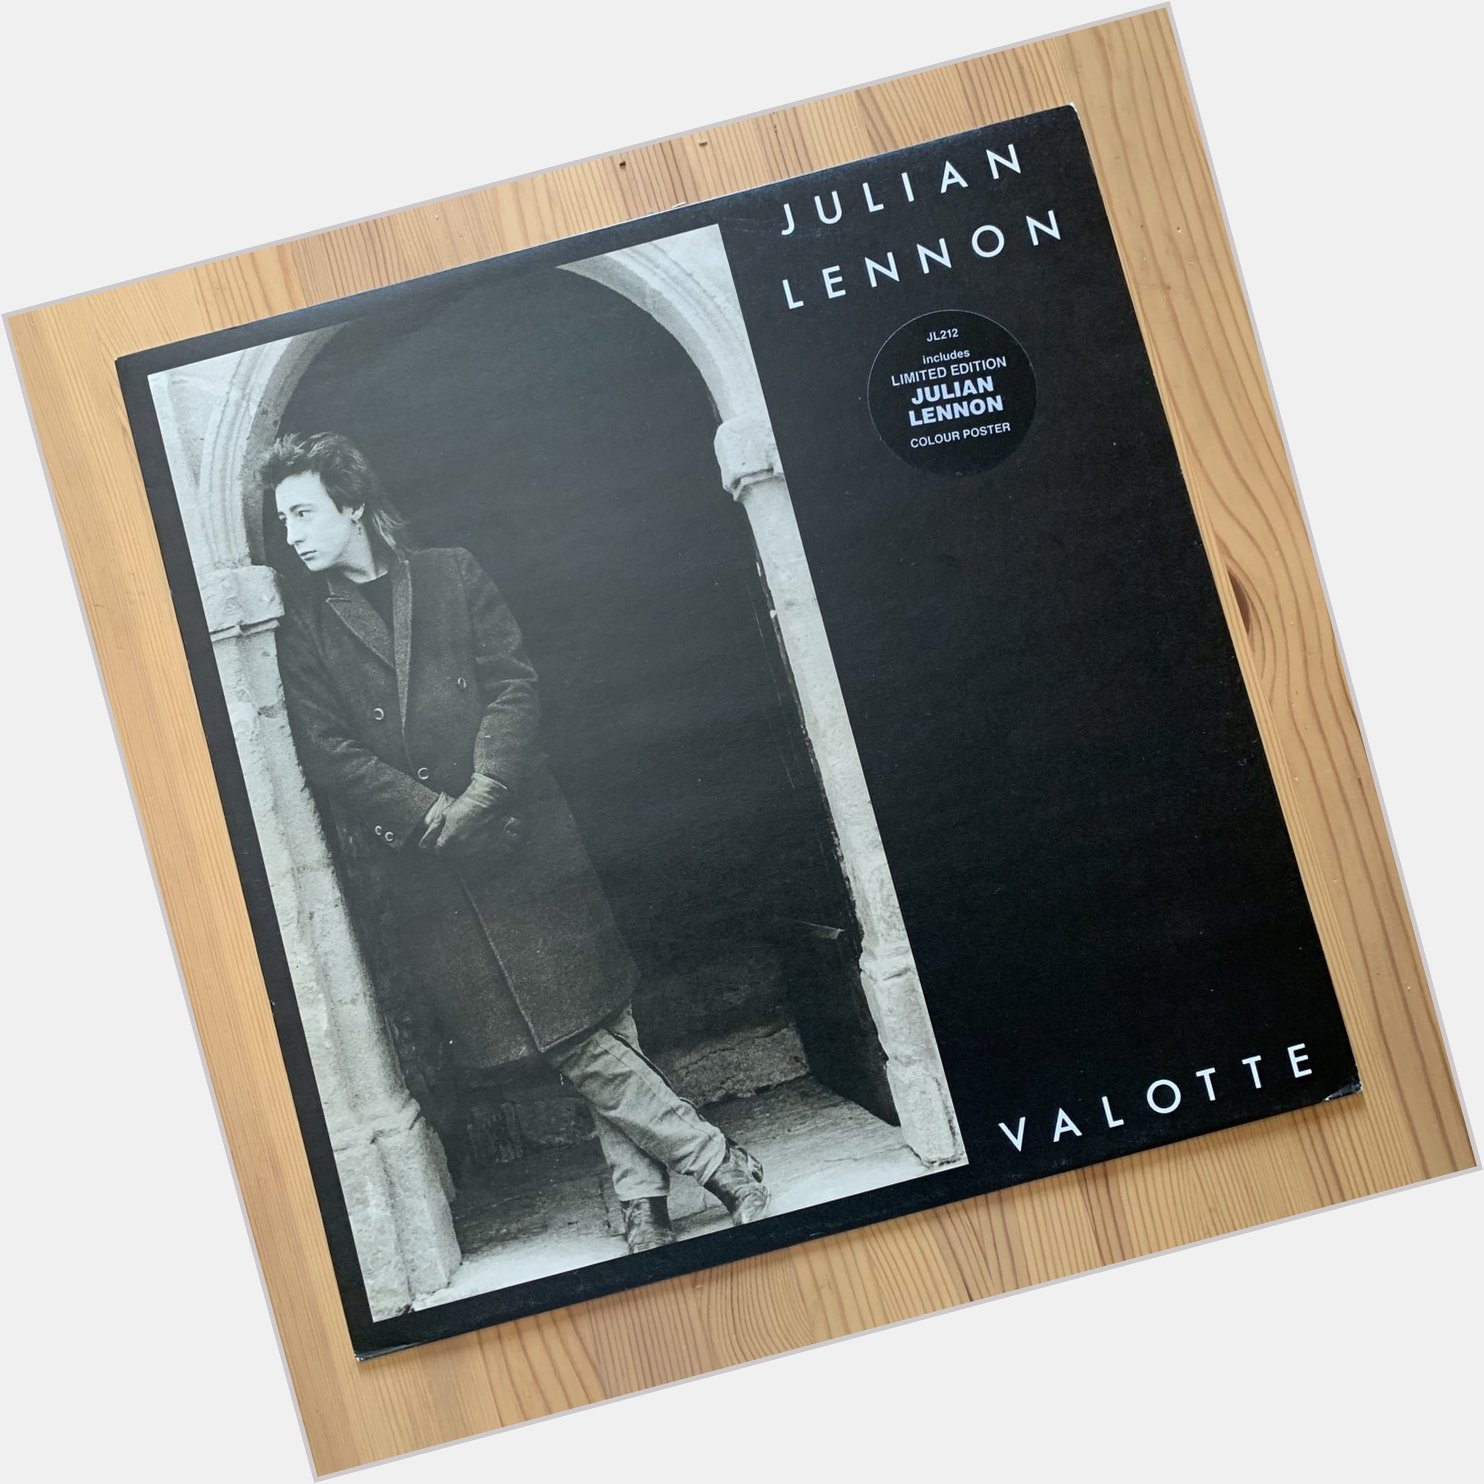 Happy Birthday,Julian Lennon
Julian Lennon-Valotte          